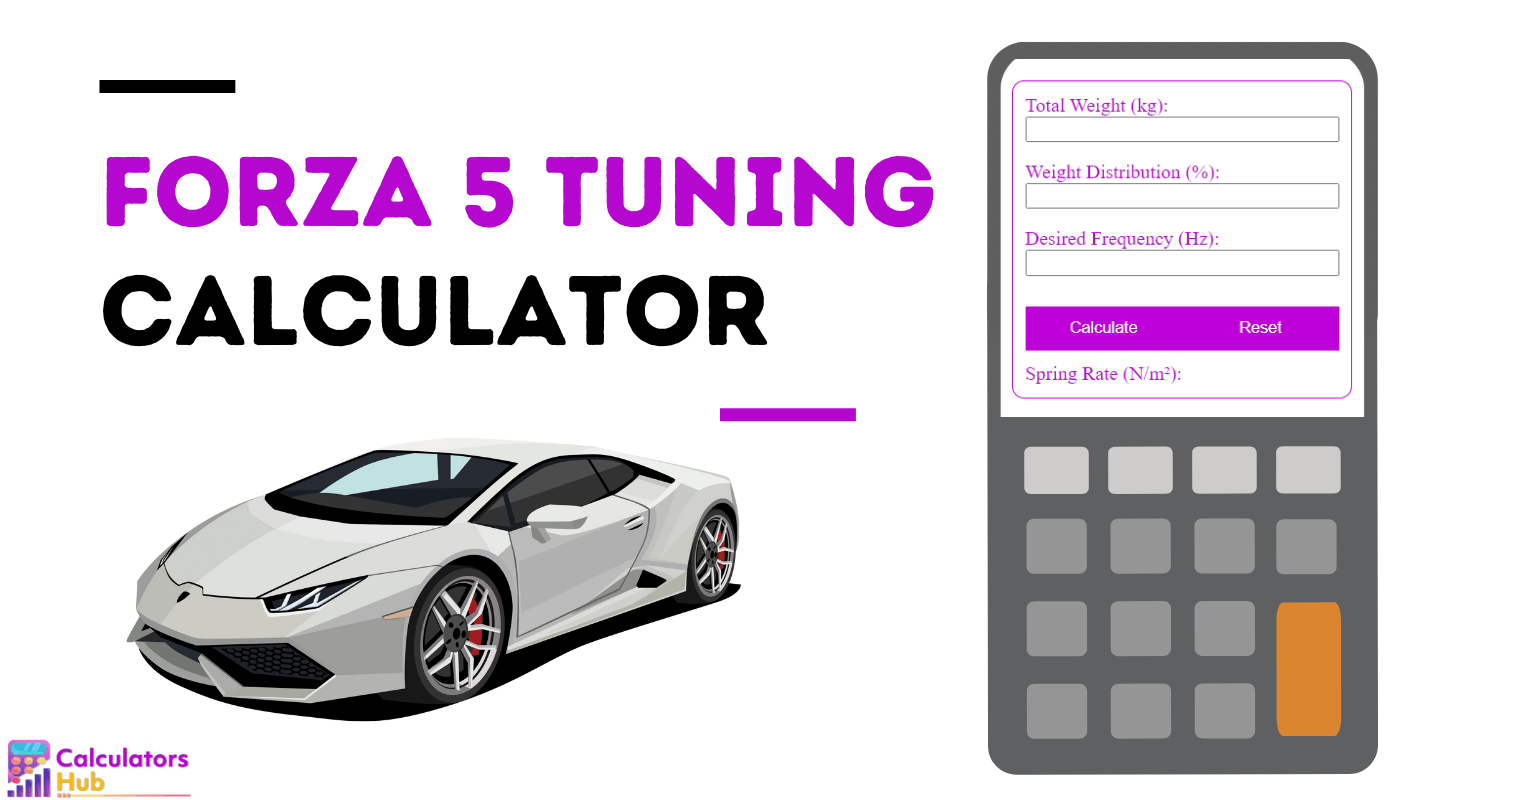 Forza 5 Tuning Calculator